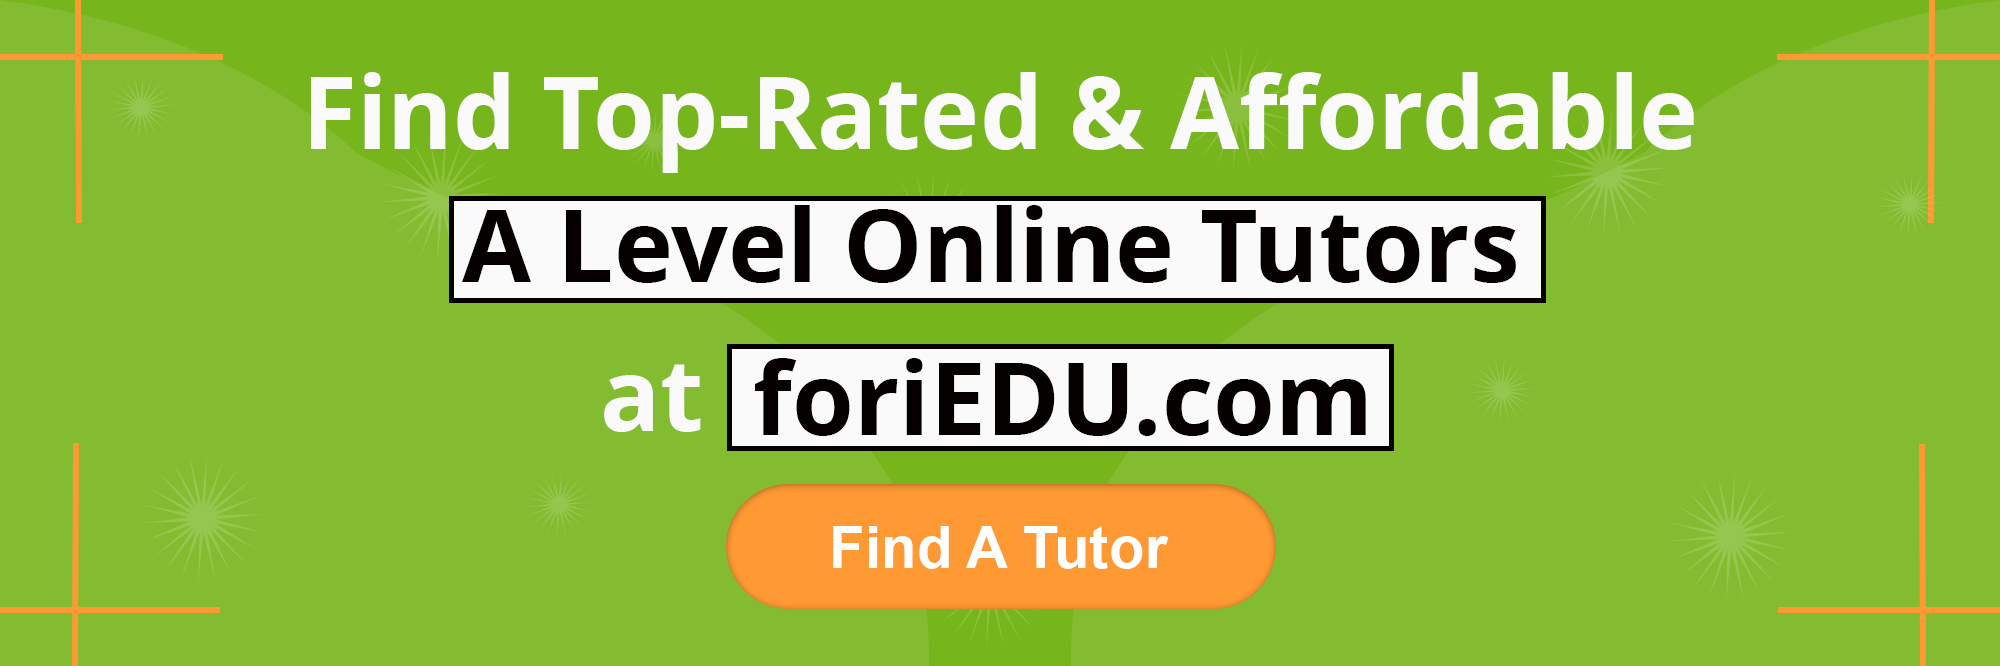 A Level online tutors